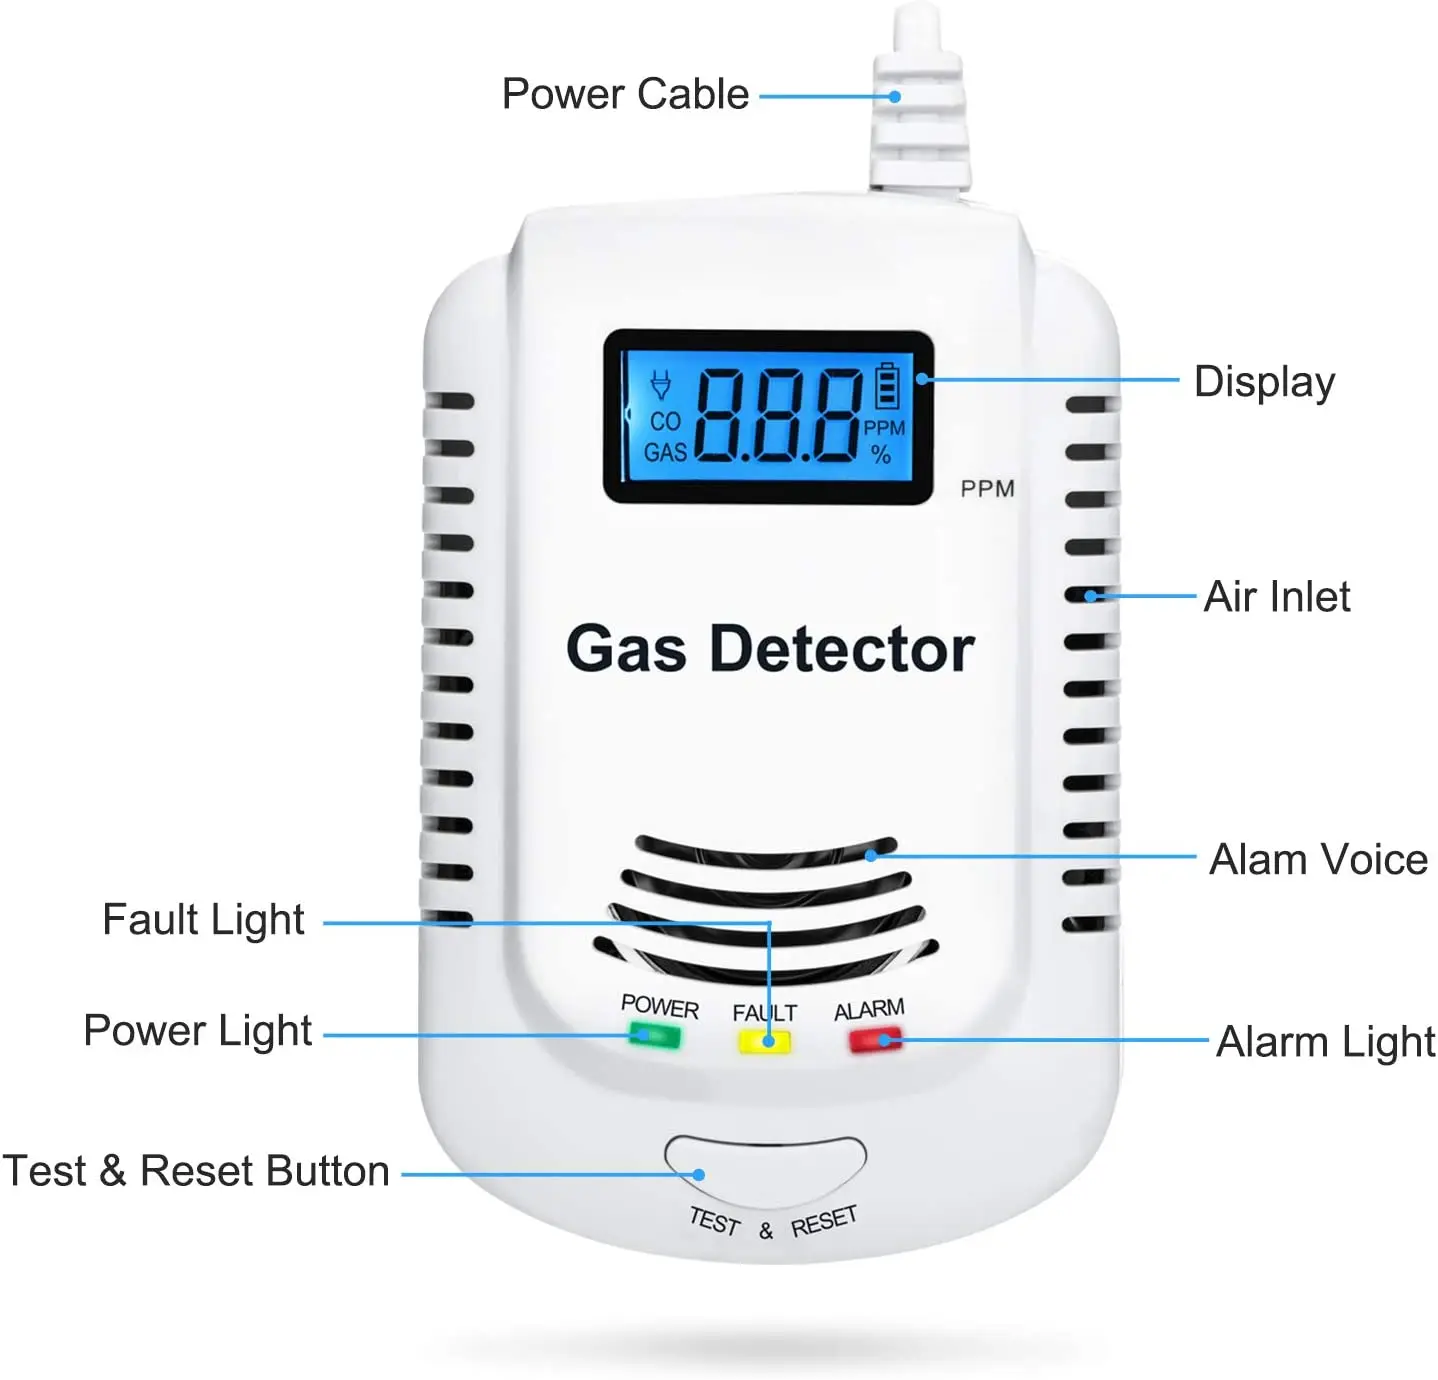 Gas Detector 2 in 1 Alarm Independent Carbon Monoxide Leak Smoke Sensor Methane Propane Voice Warning Security Protection Home enlarge